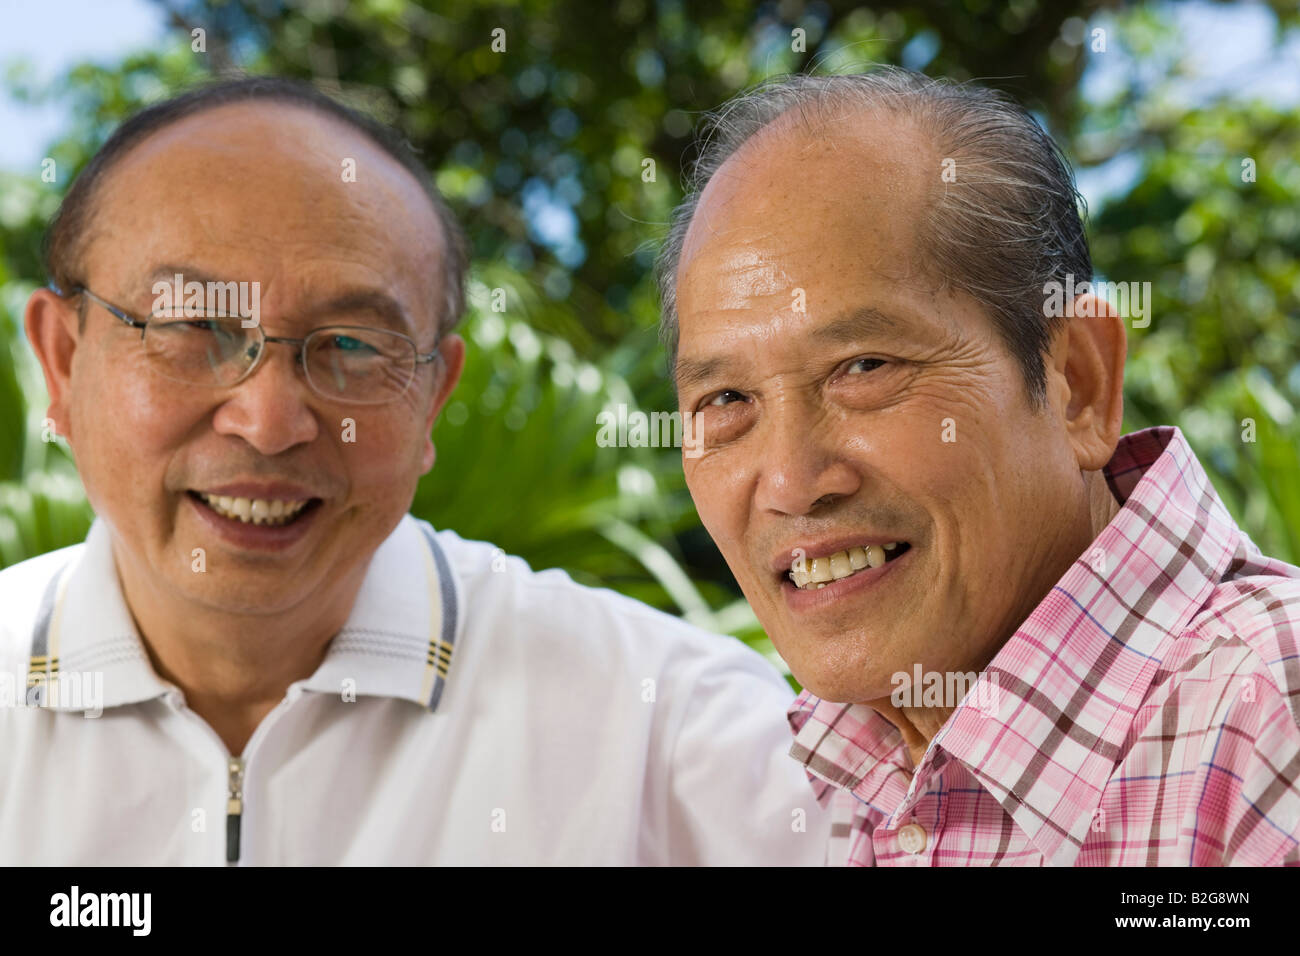 Portrait of two senior men smiling Stock Photo